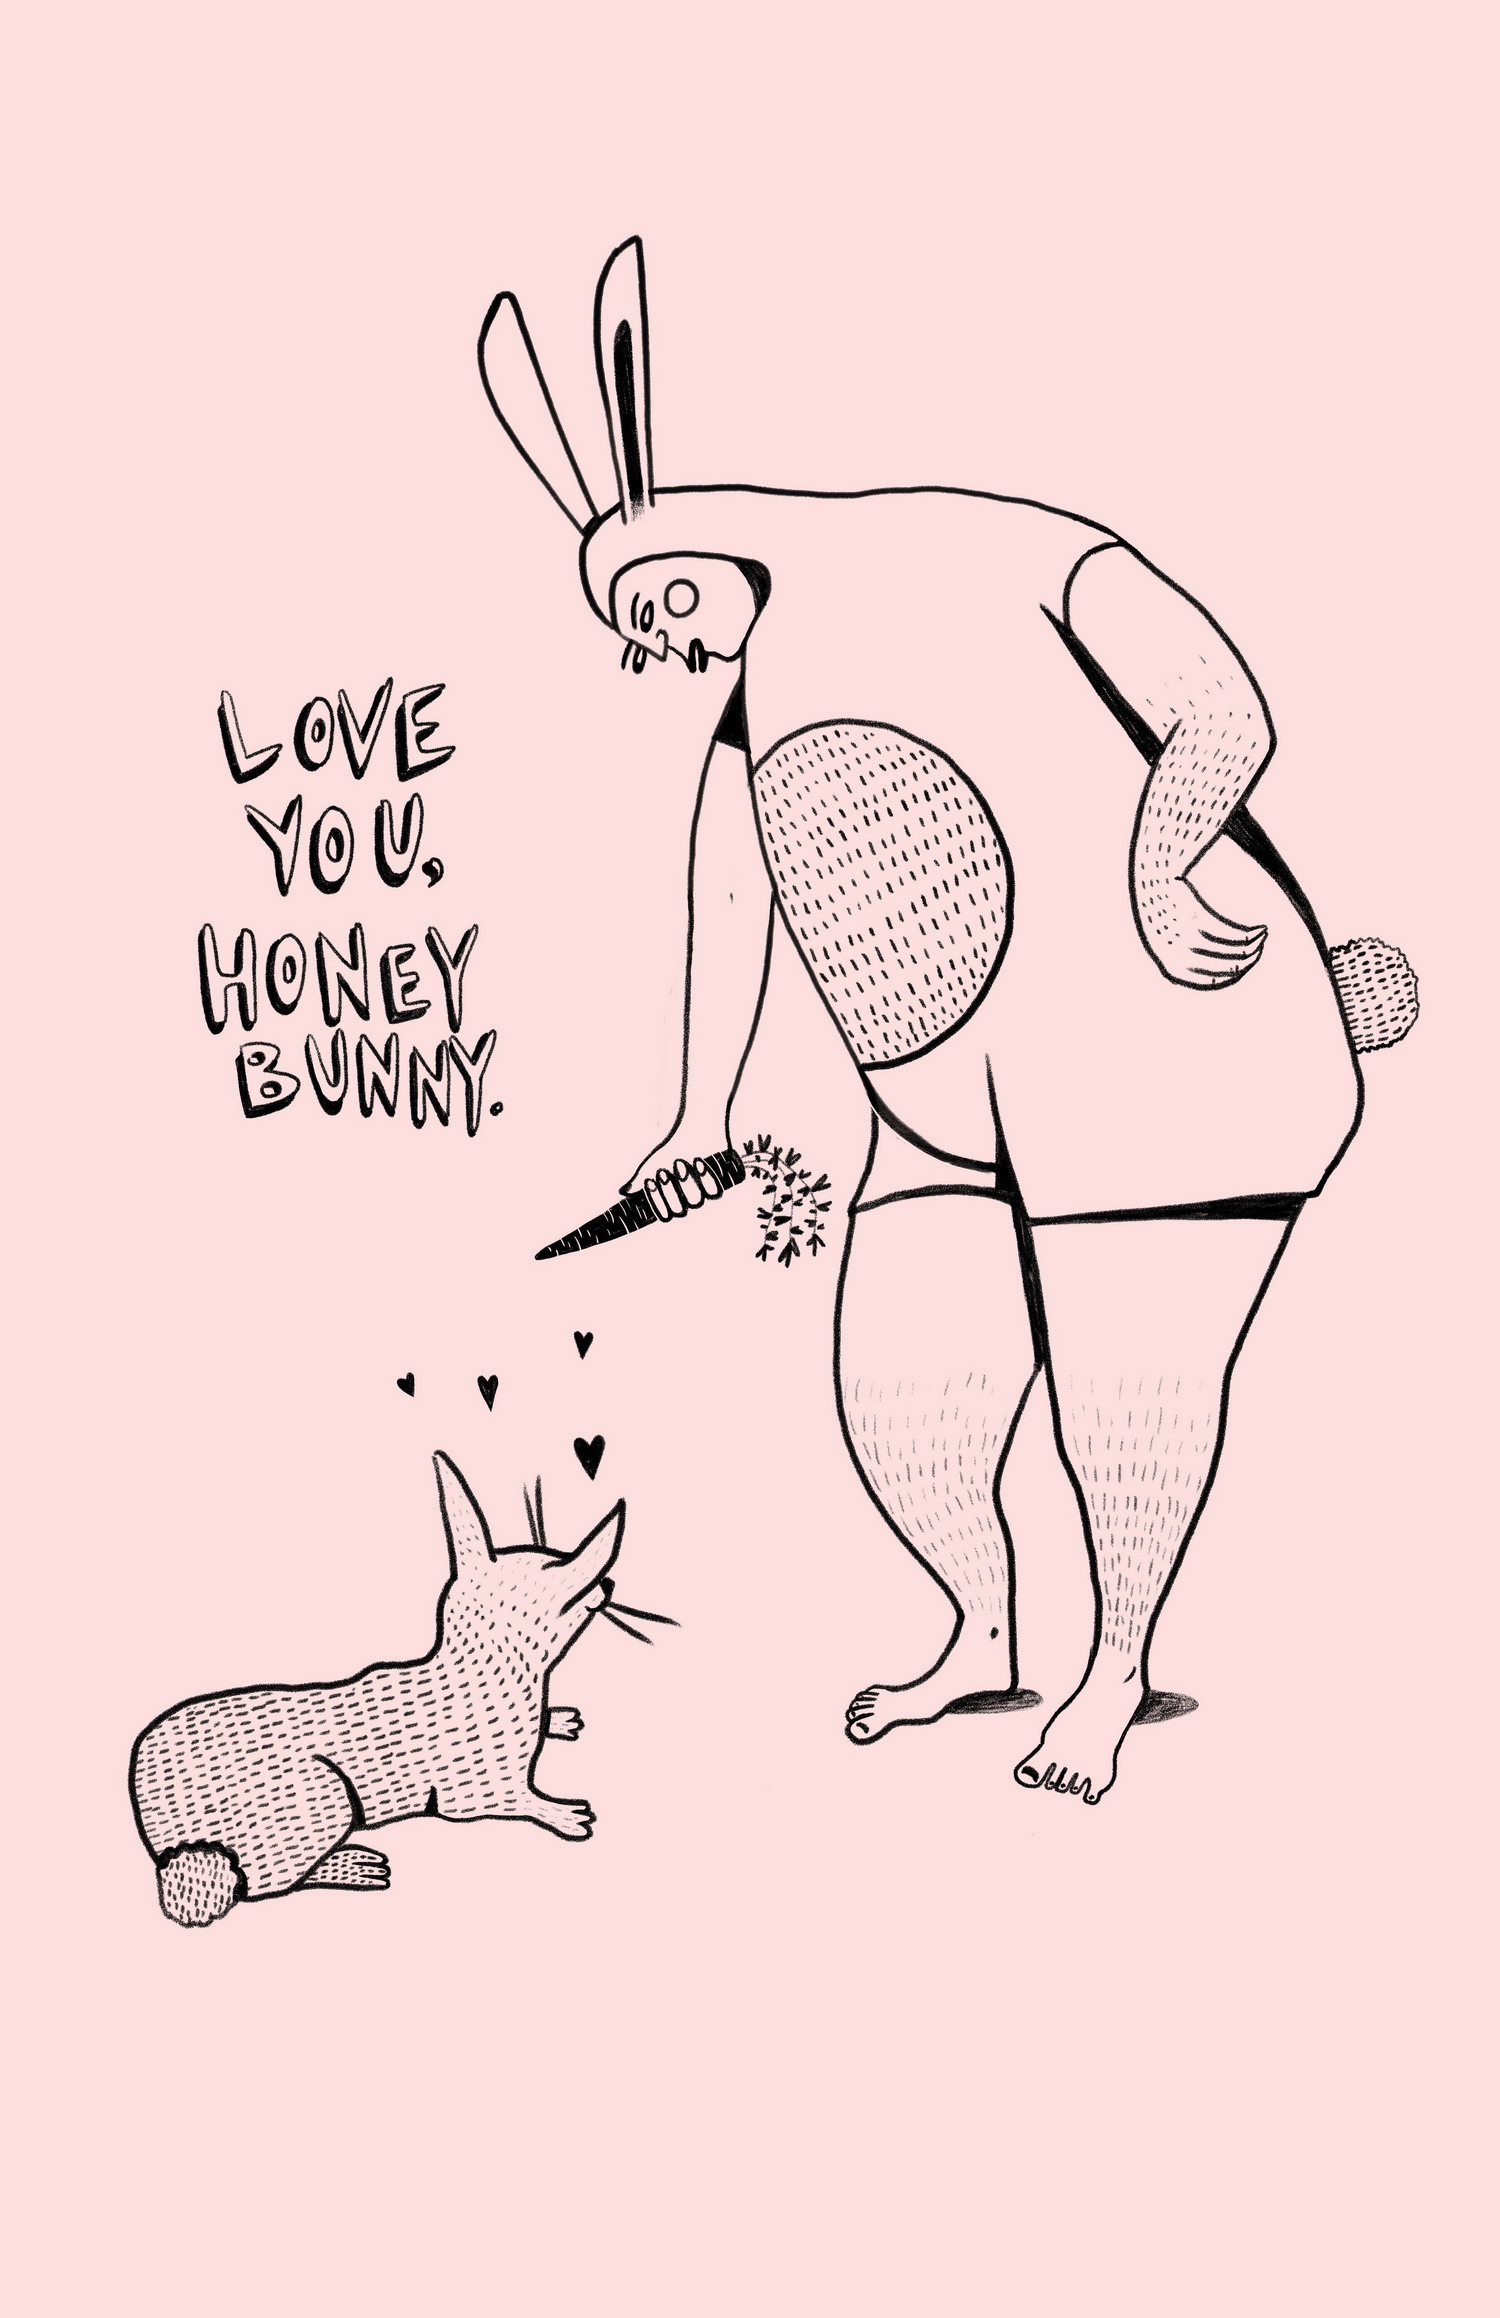 Love you, honey bunny